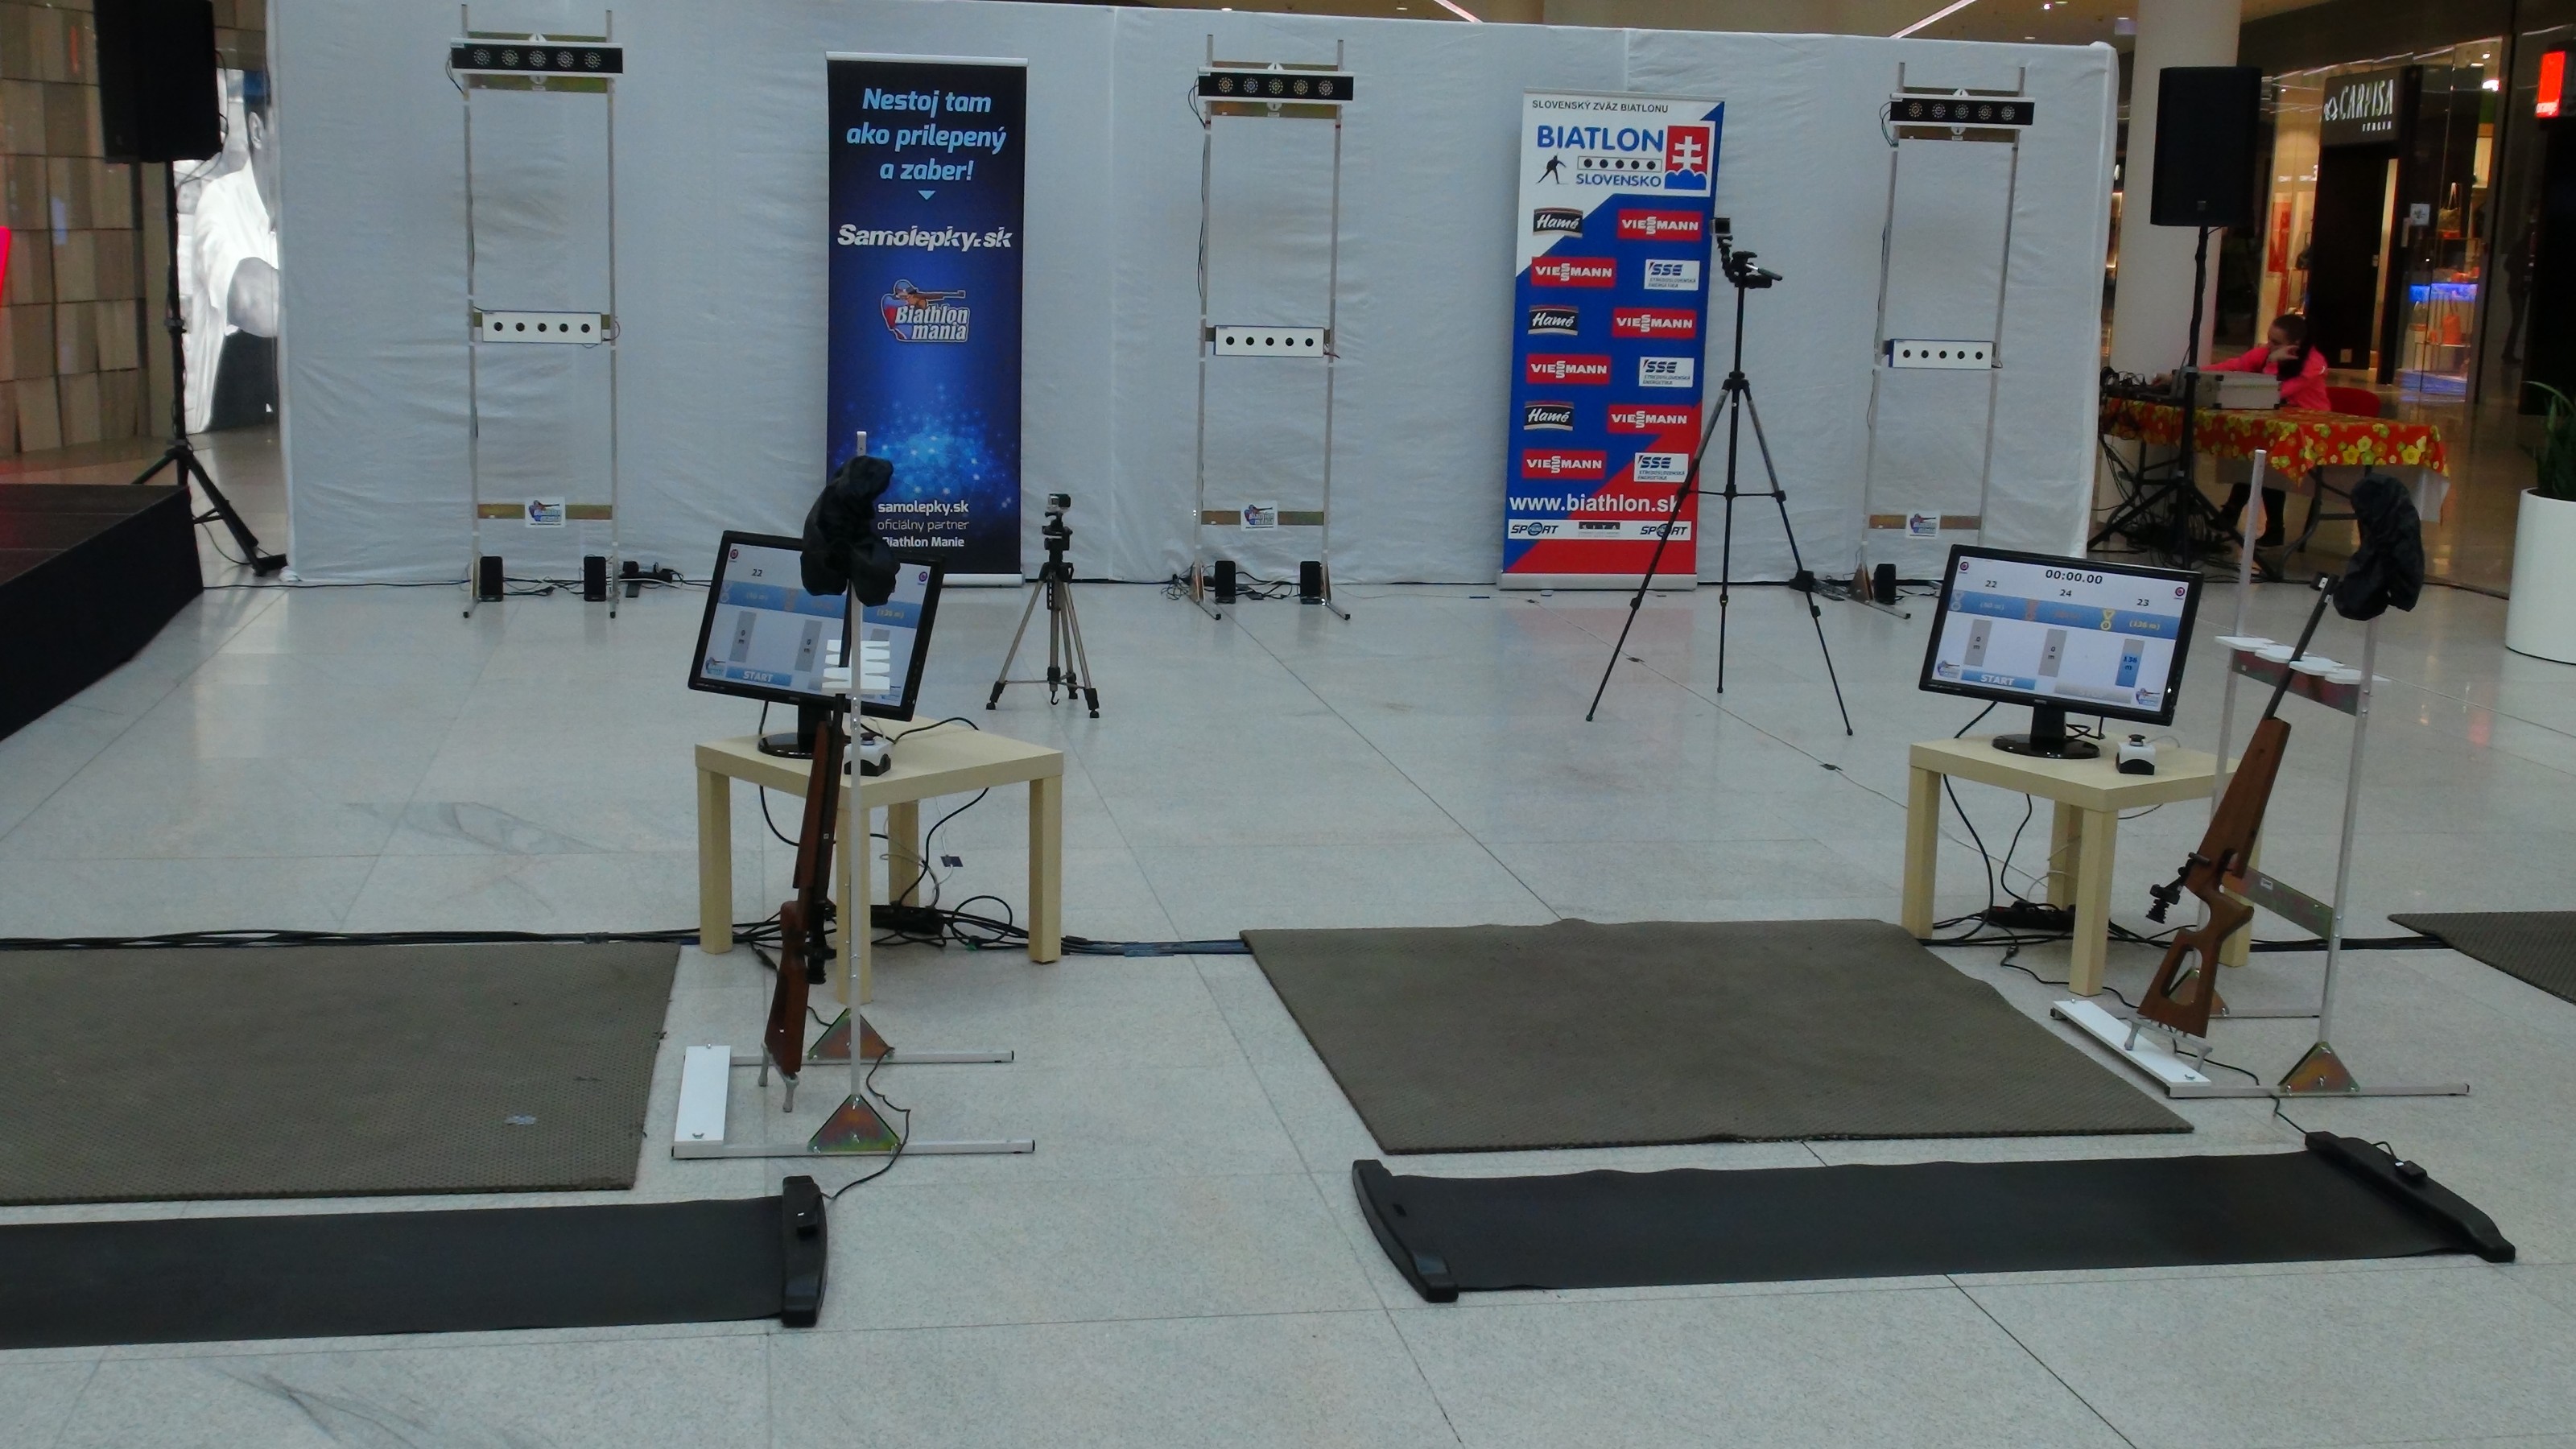 Laser biathlon shooting range for shooting up to 10 meters - 